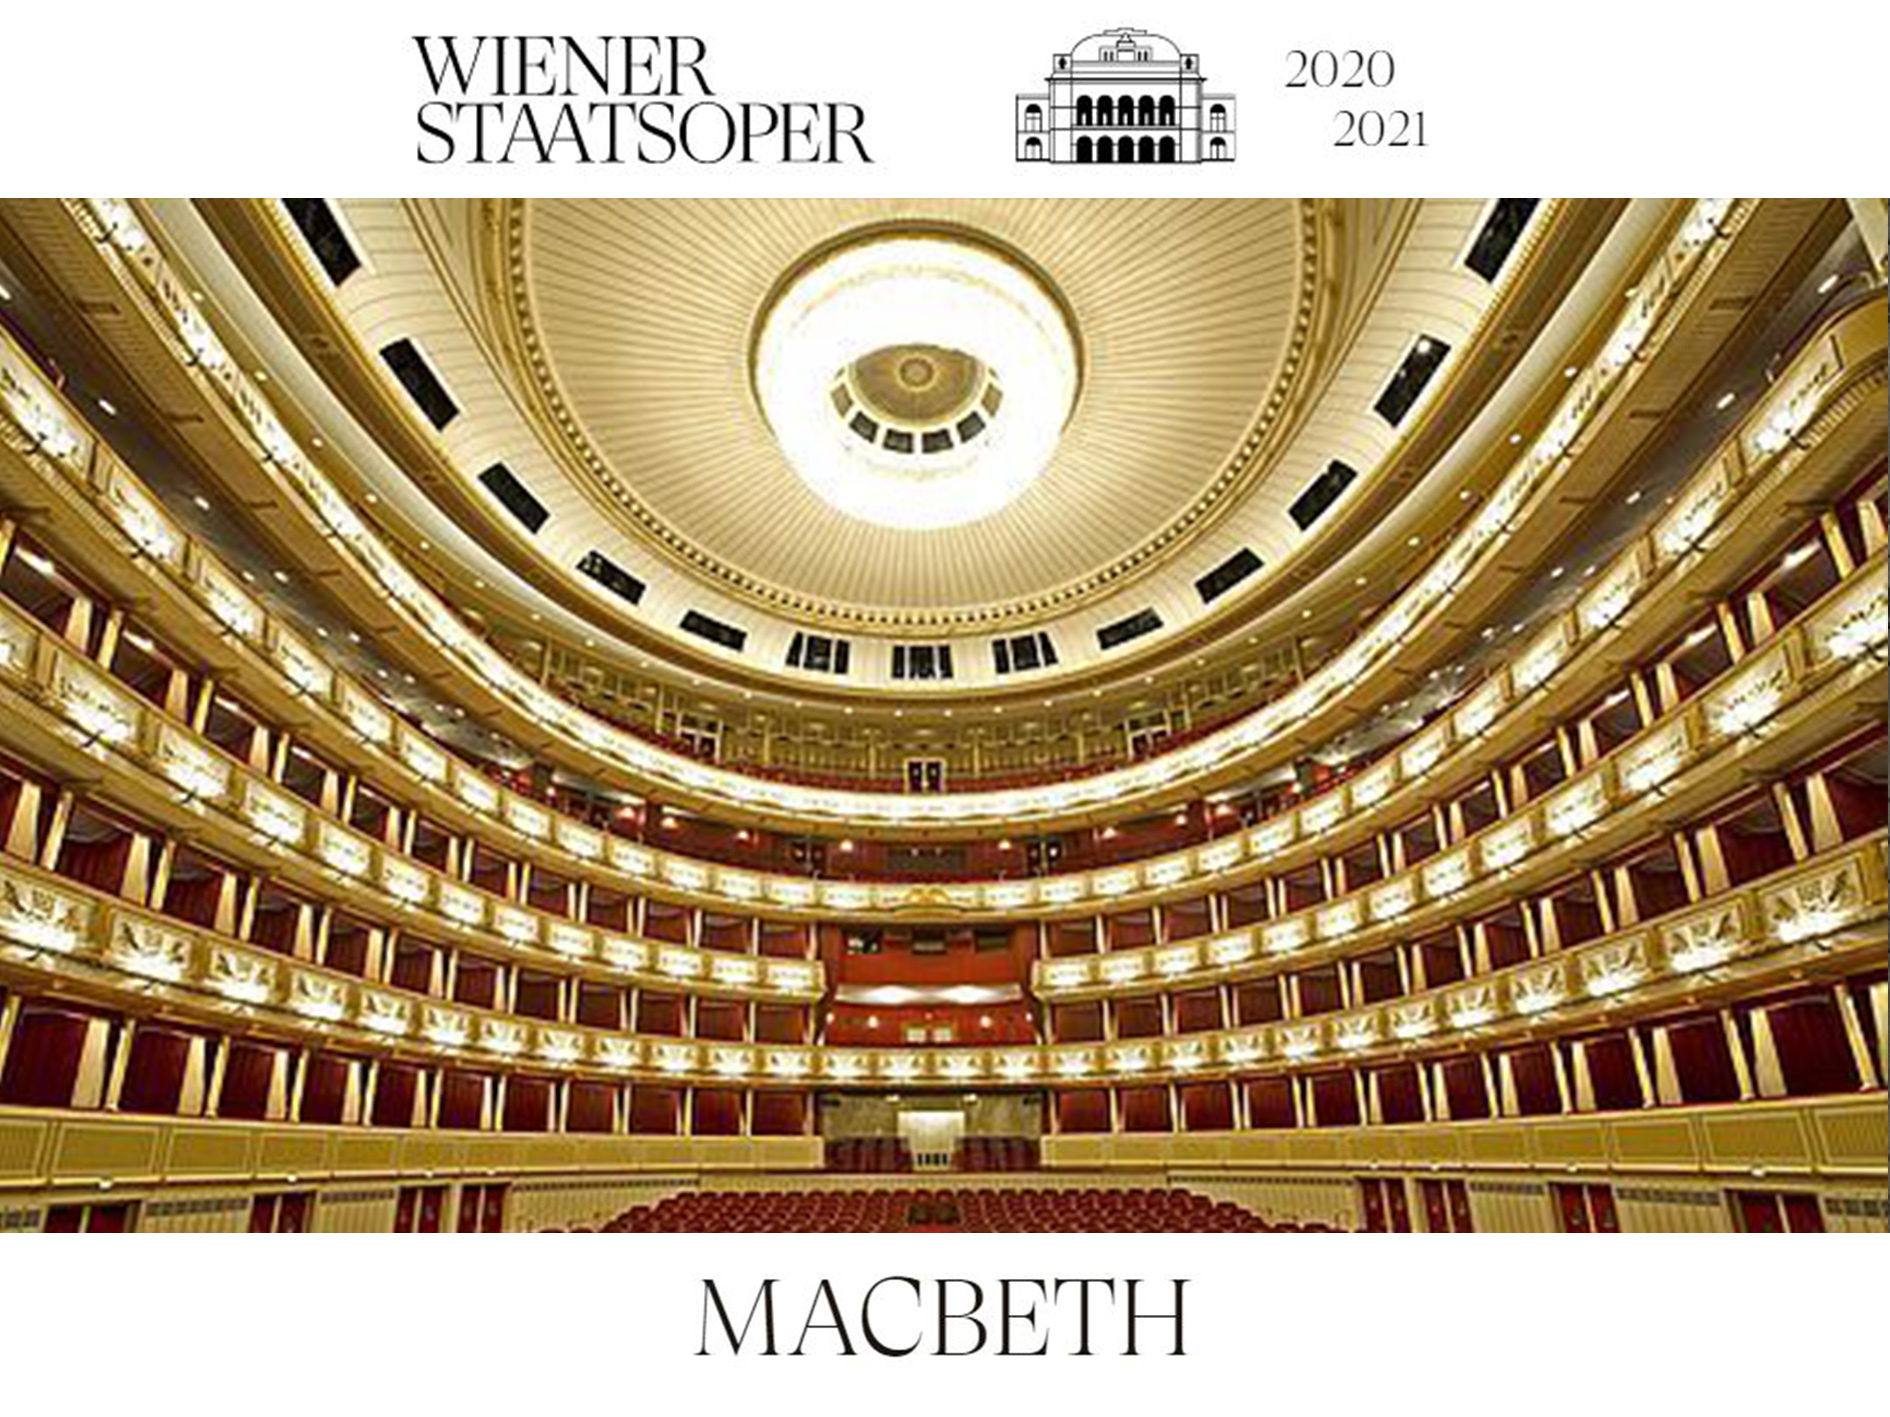 Macbeth - Wiener Staatsoper (2021) (Produktion - Wien, Österreich